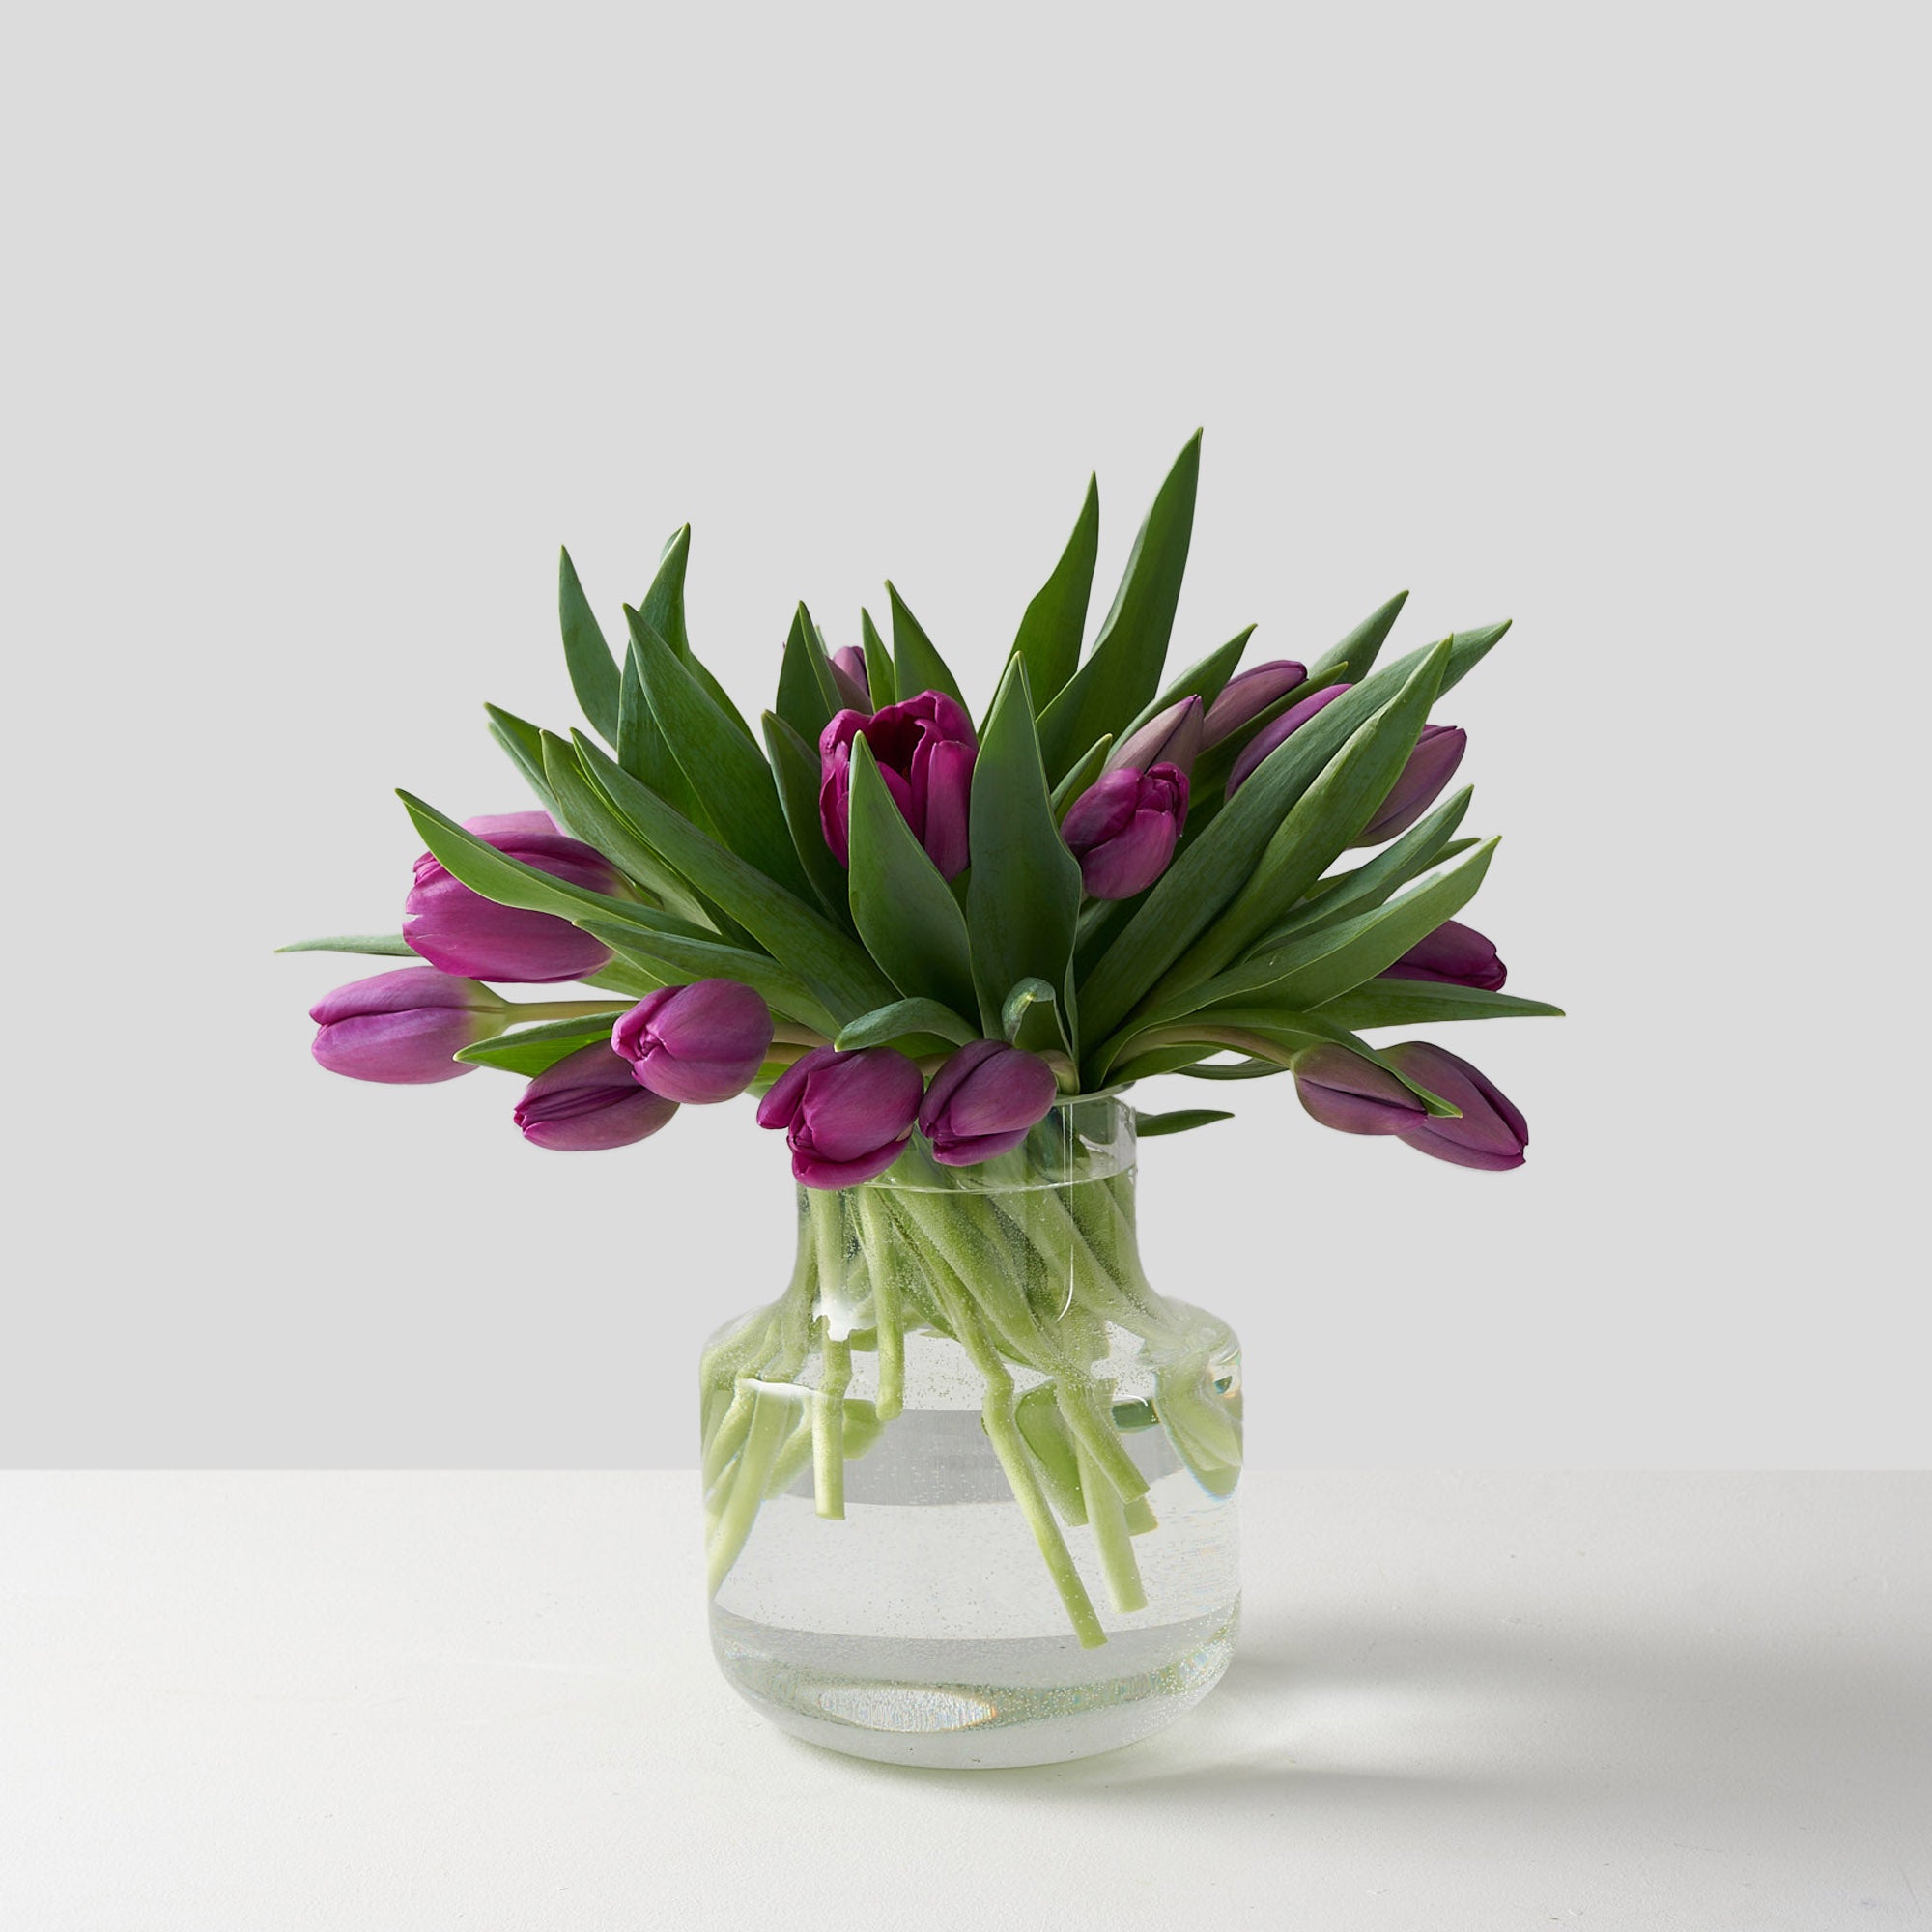 Pricilla (Tulipes violettes arrangées)